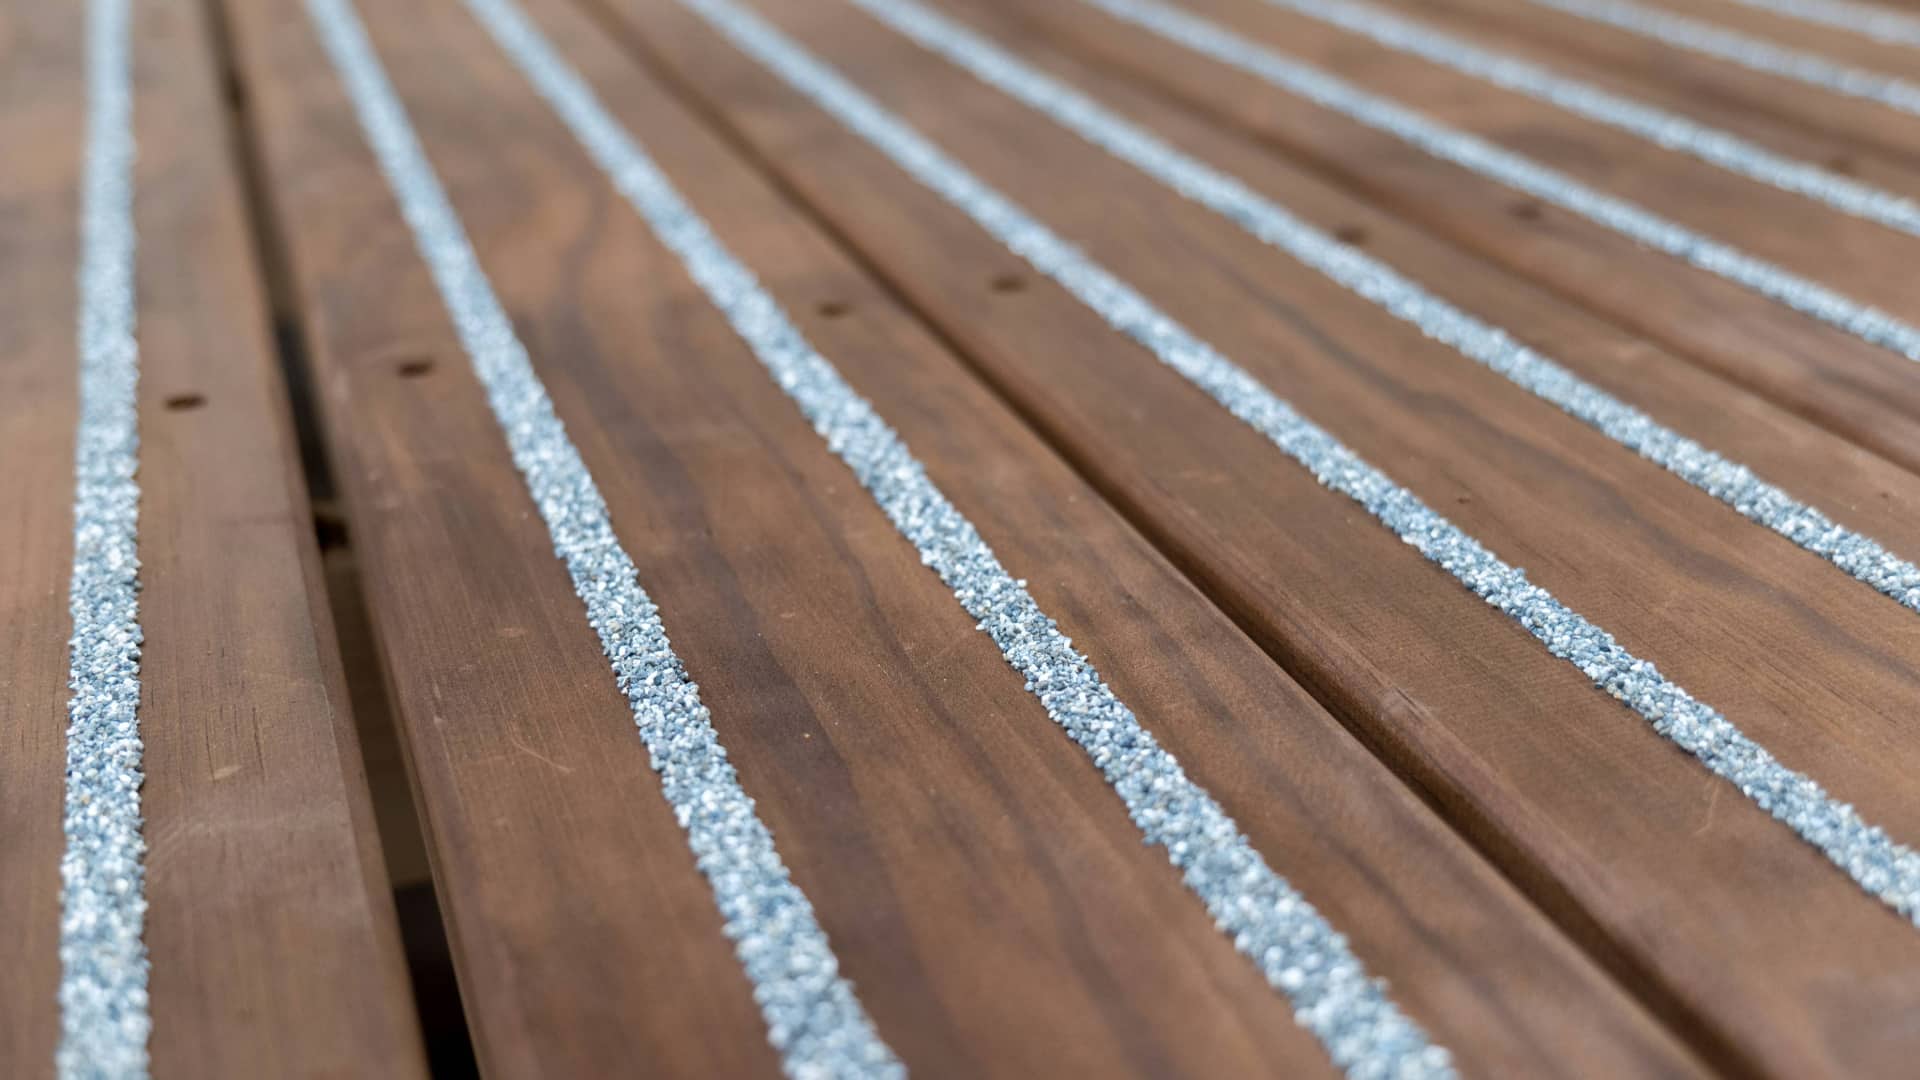 DeckWright’s Stunning New Abodo Wood Anti-Slip Decking Boards